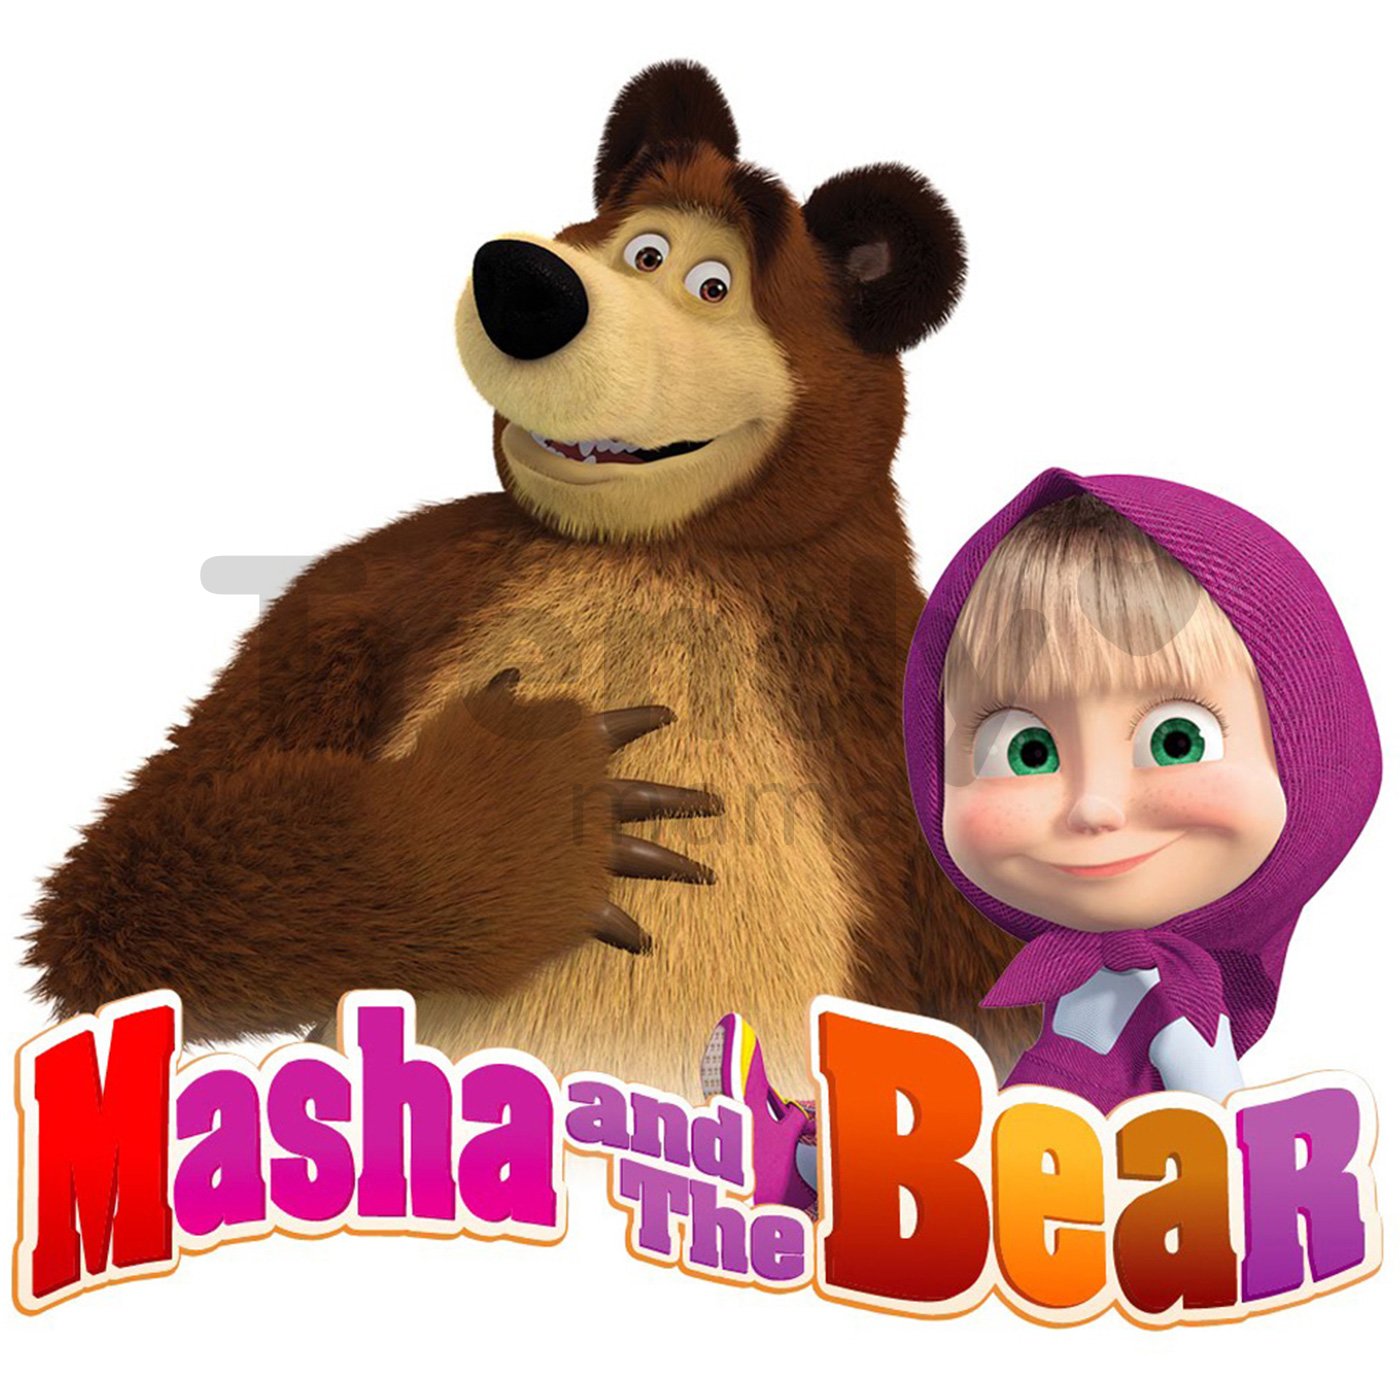 Masha english. Маша and the Bear. Маша и медведь картинки. Машка и медведь картинки. Маша и медведь картинки для детей.